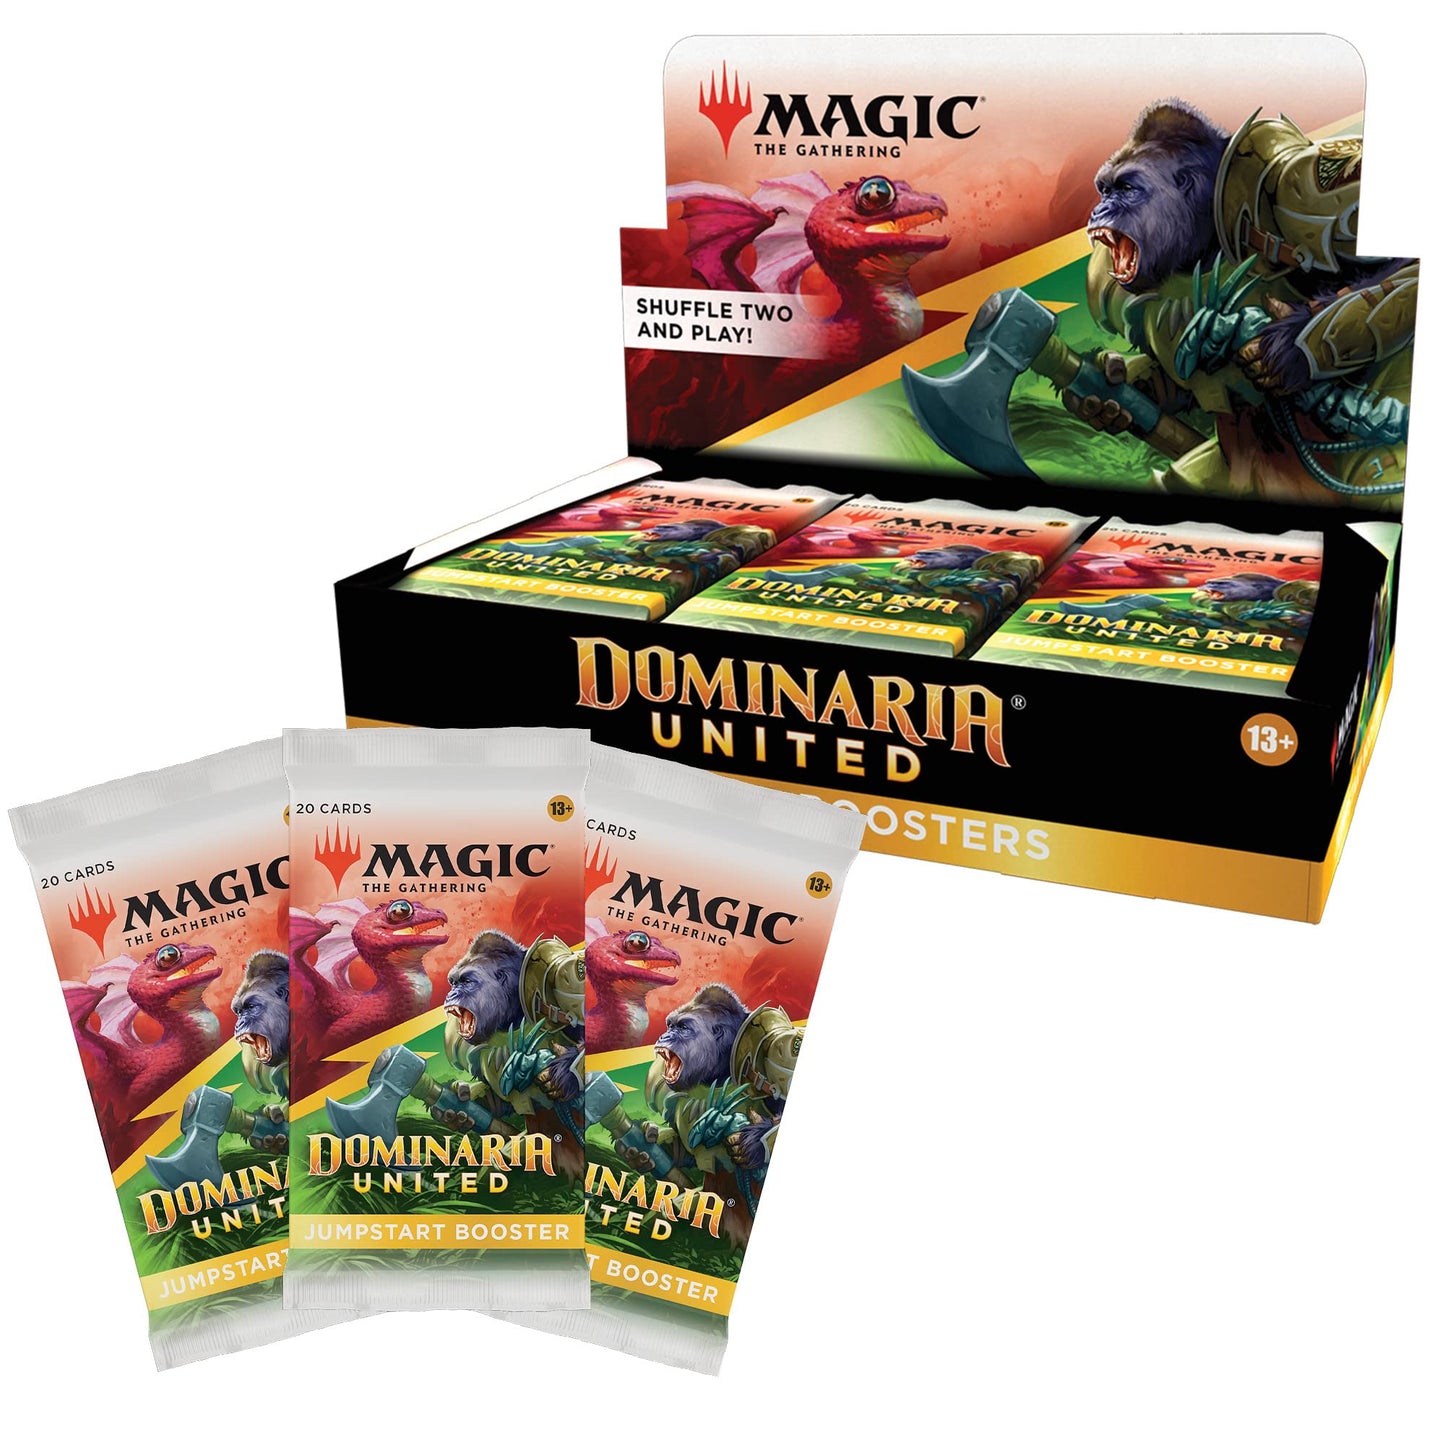 Magic: The Gathering Dominaria United Jumpstart Booster Box | 18 Packs (360 Magic Cards)